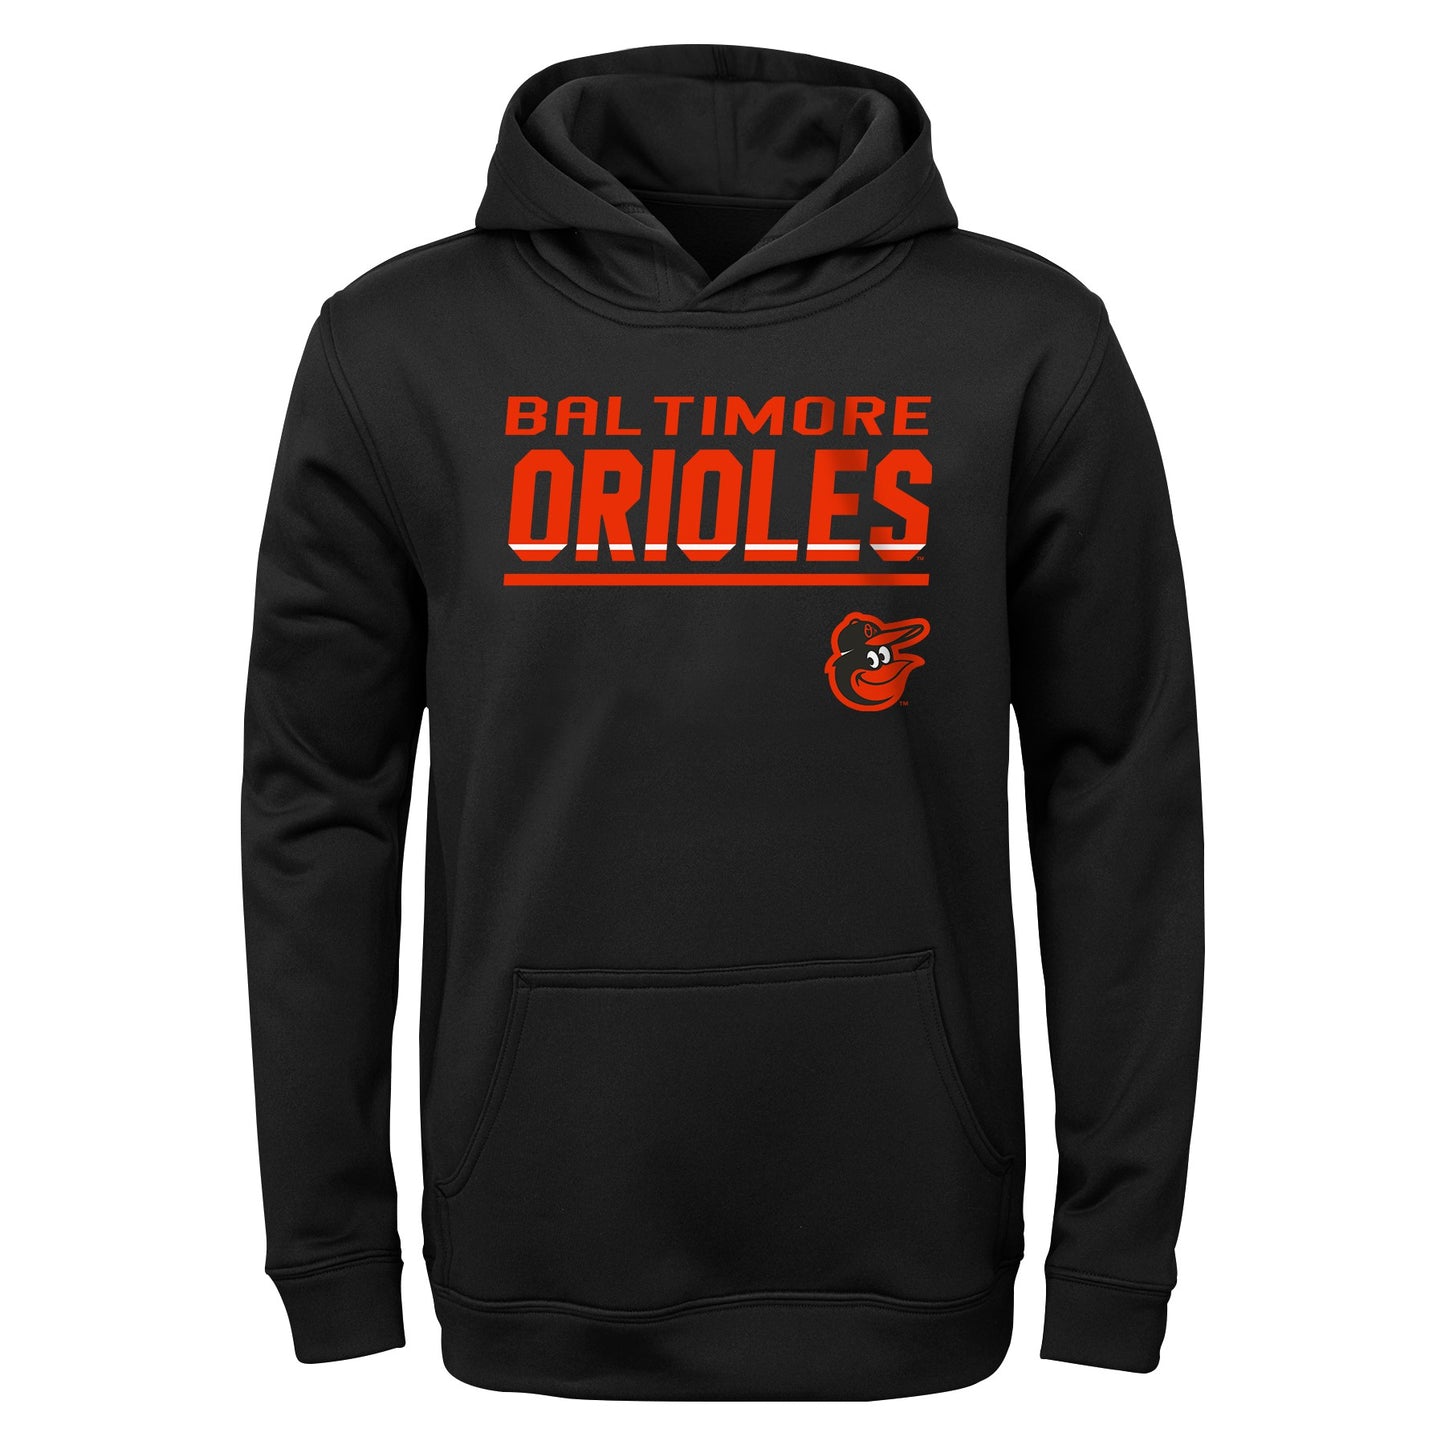 Baltimore Orioles Outerstuff Youth The Headline Sweatshirt